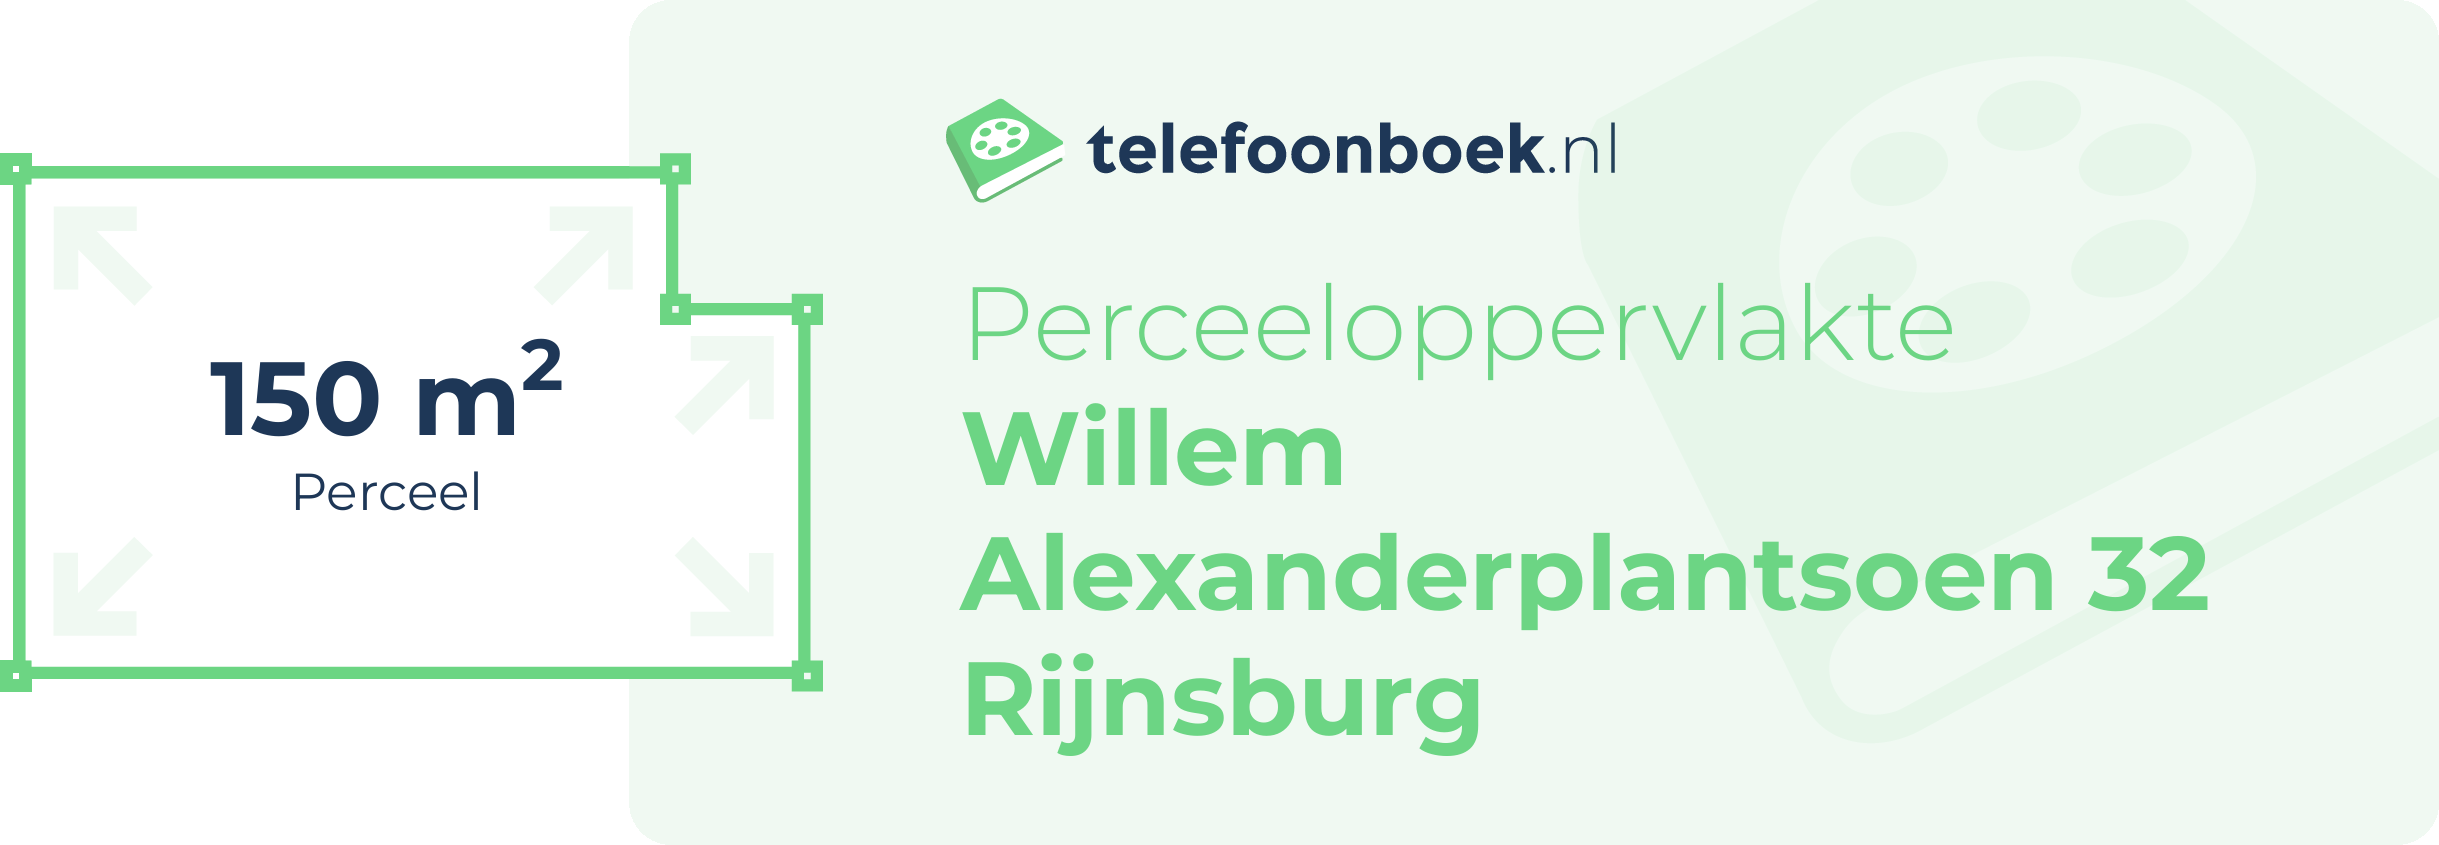 Perceeloppervlakte Willem Alexanderplantsoen 32 Rijnsburg